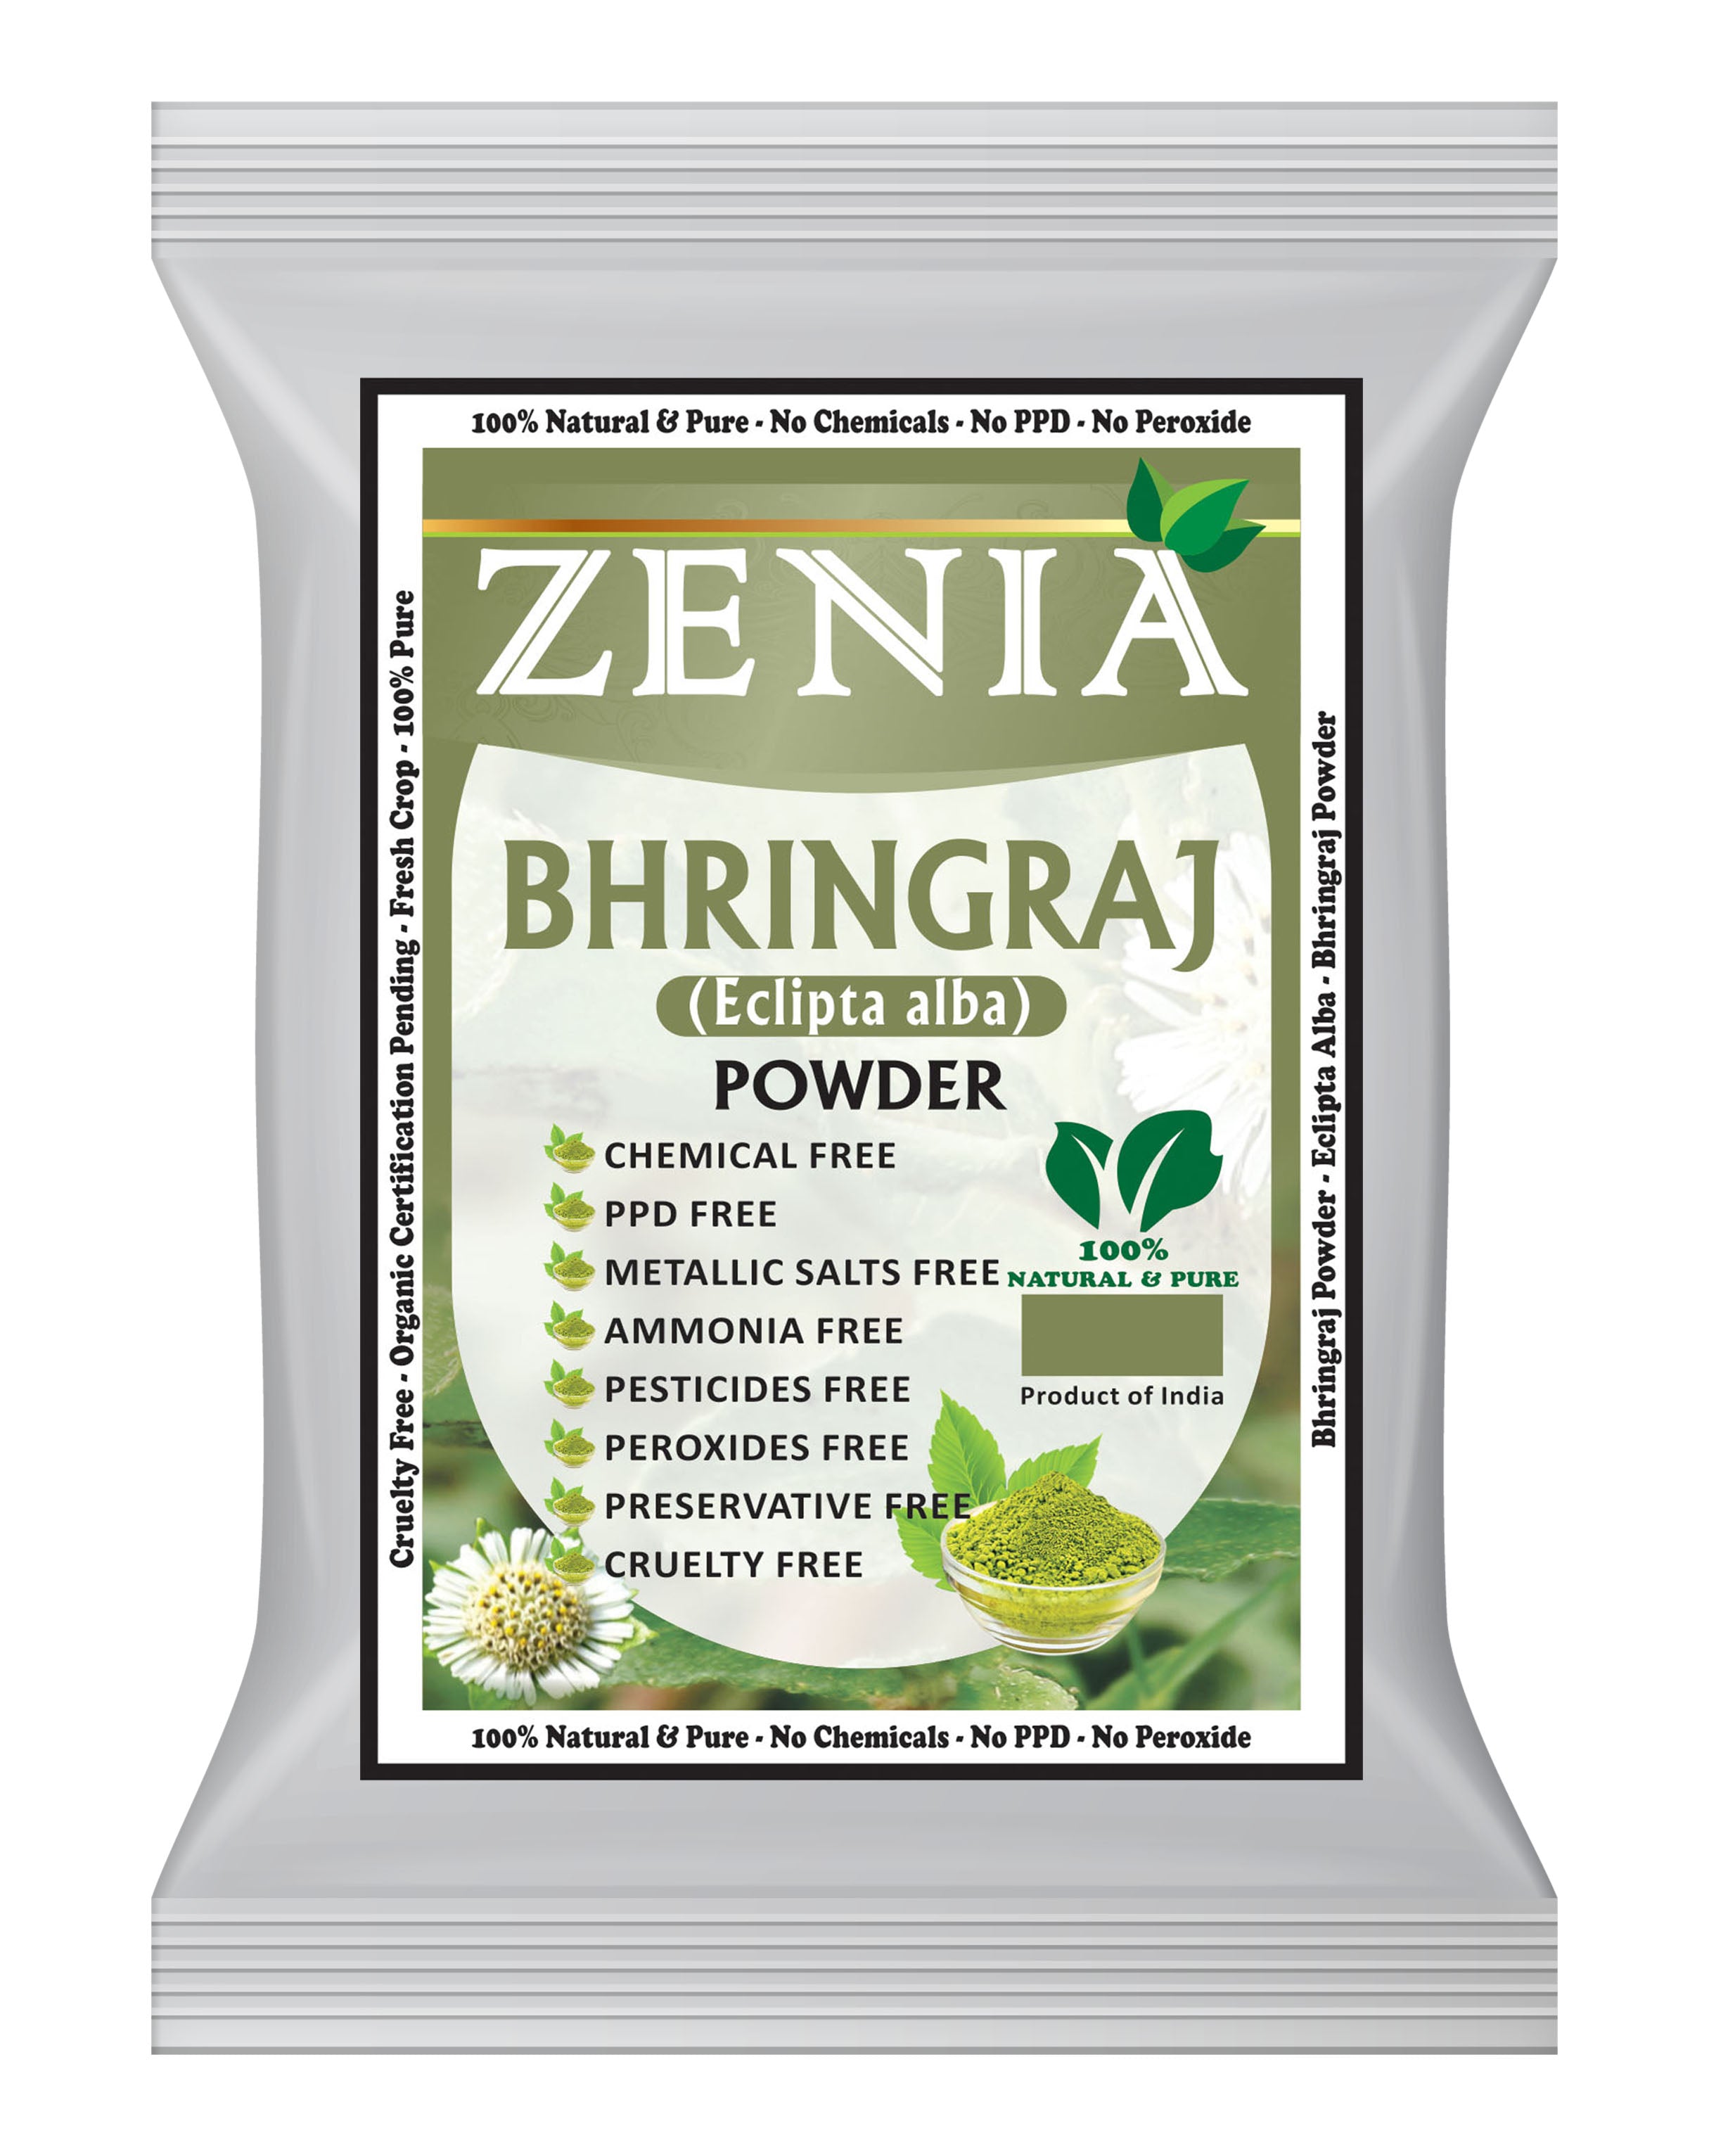 Zenia Natural Bhringraj (Eclipta alba) Powder